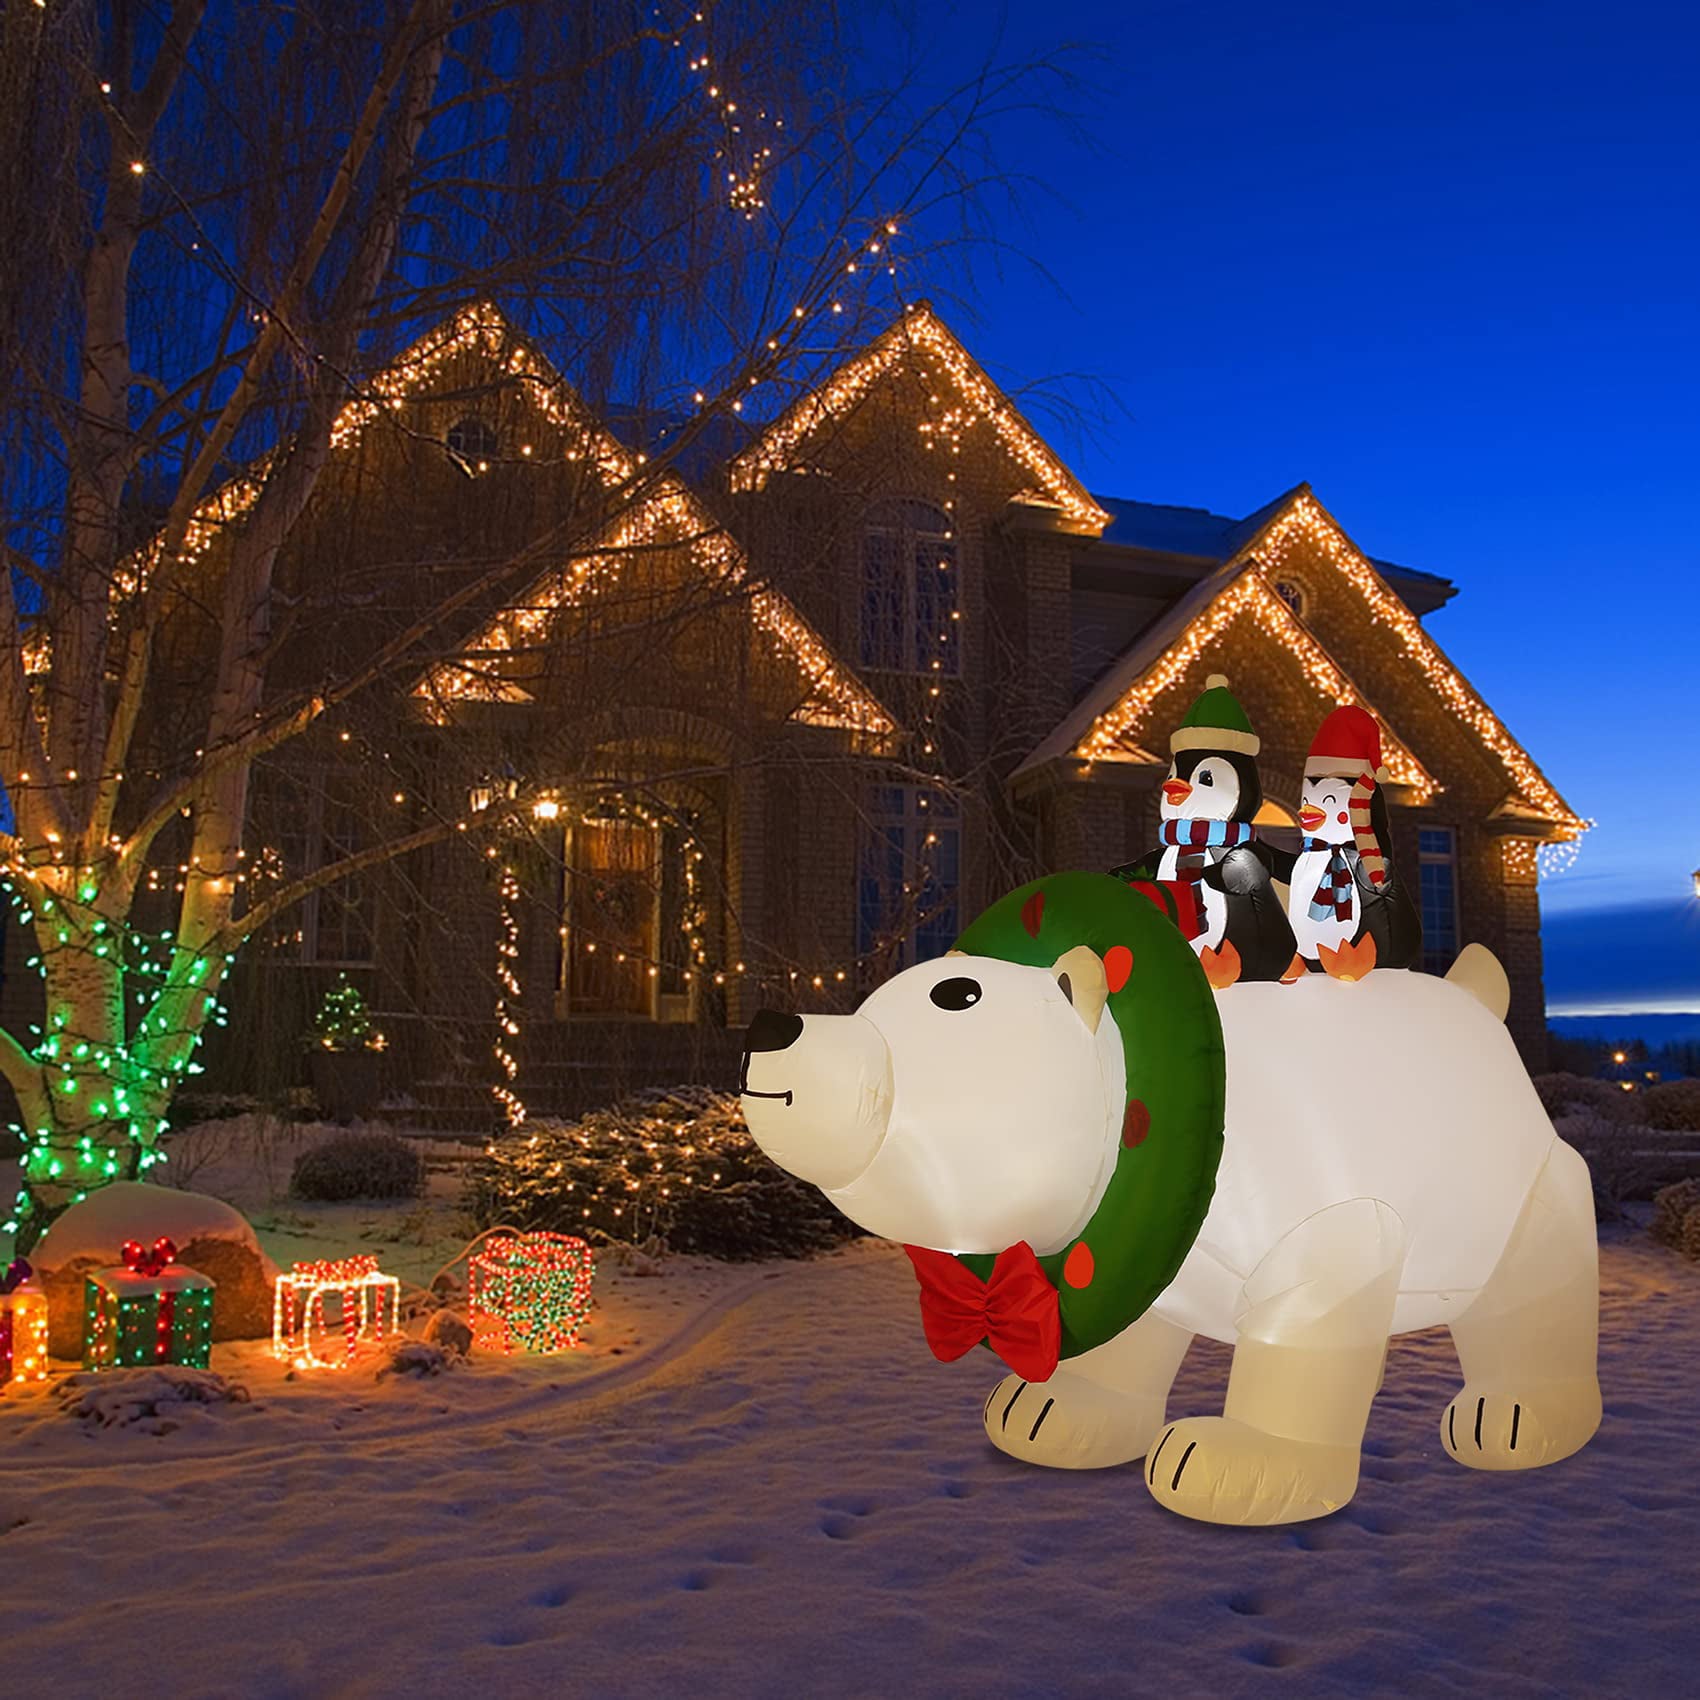 6FT Giant Christmas Inflatable Polar Bear Decorations Outdoor Christmas Inflatables with Led Lights for Holiday Yard Decor Christmas Xmas Indoor Outdoor Yard Decorations